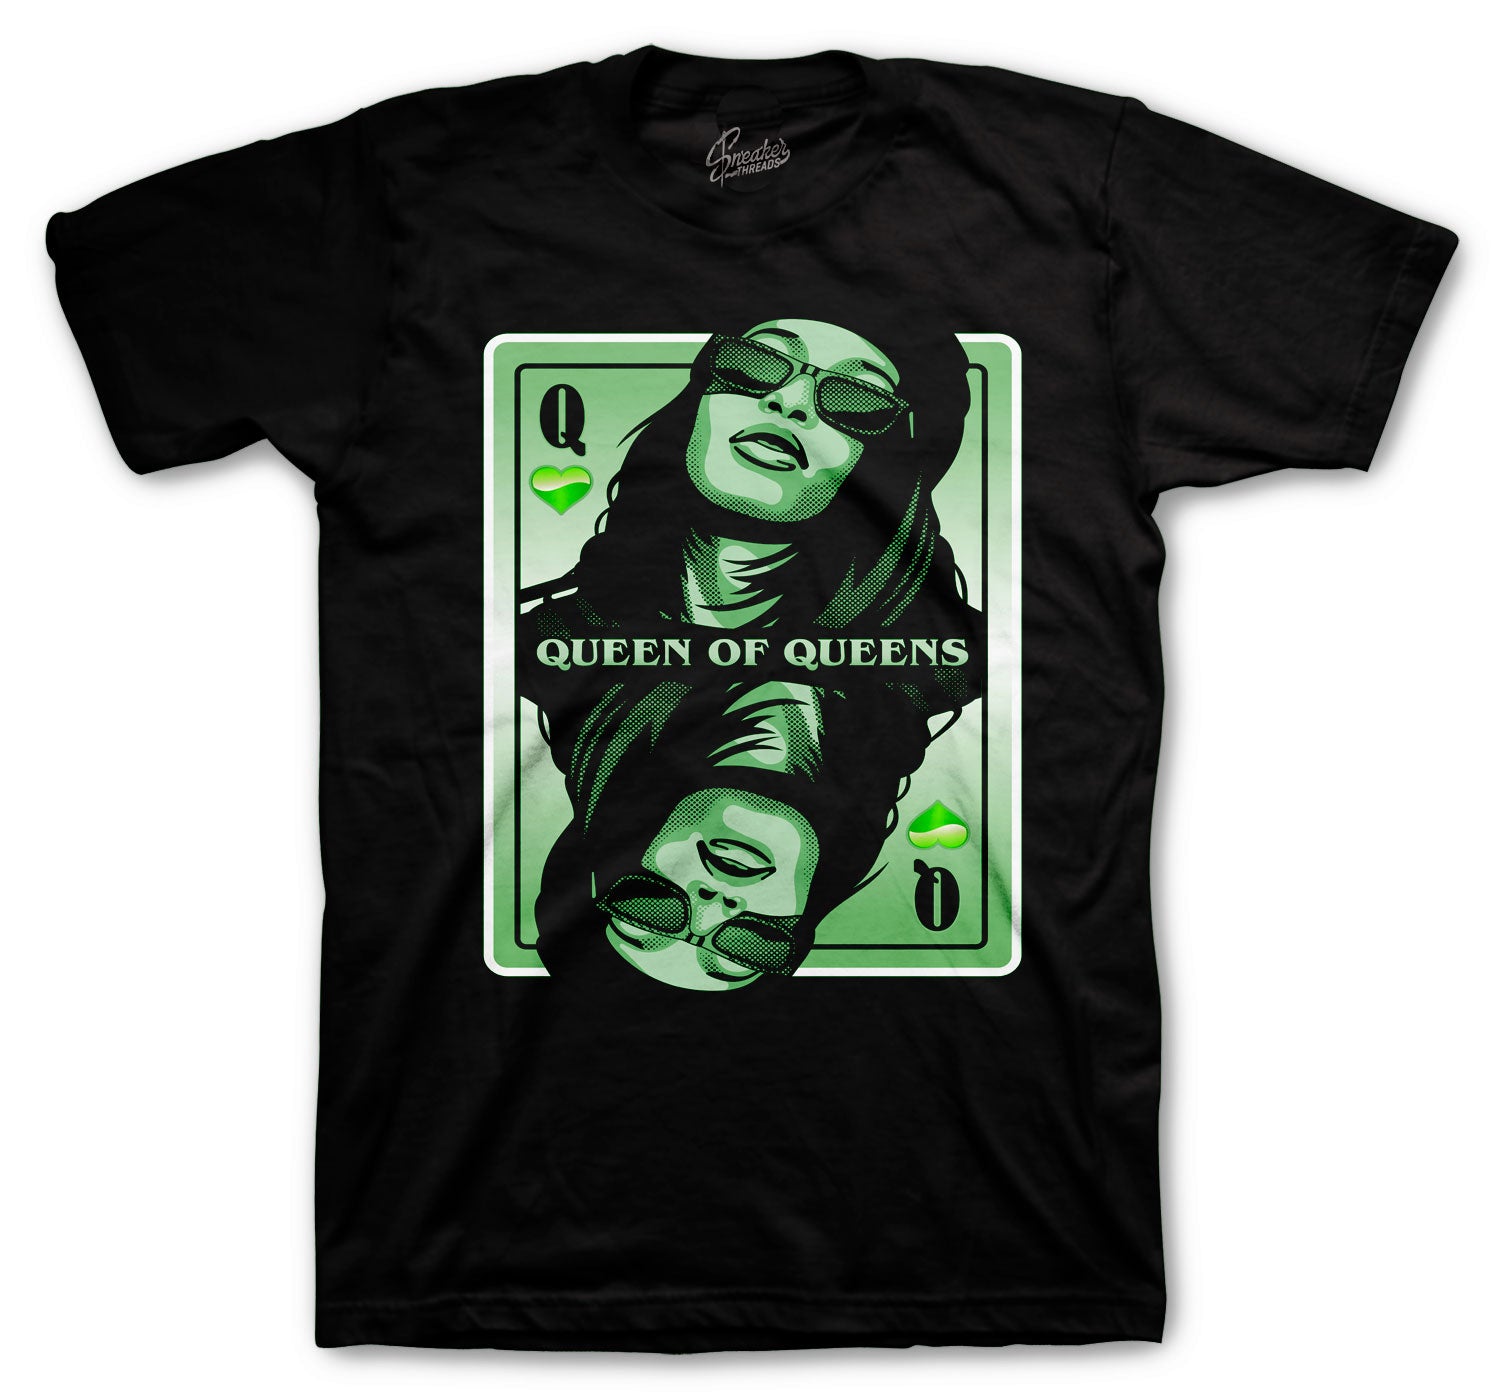 Retro 3 Pine Green Shirt - Queens - Black